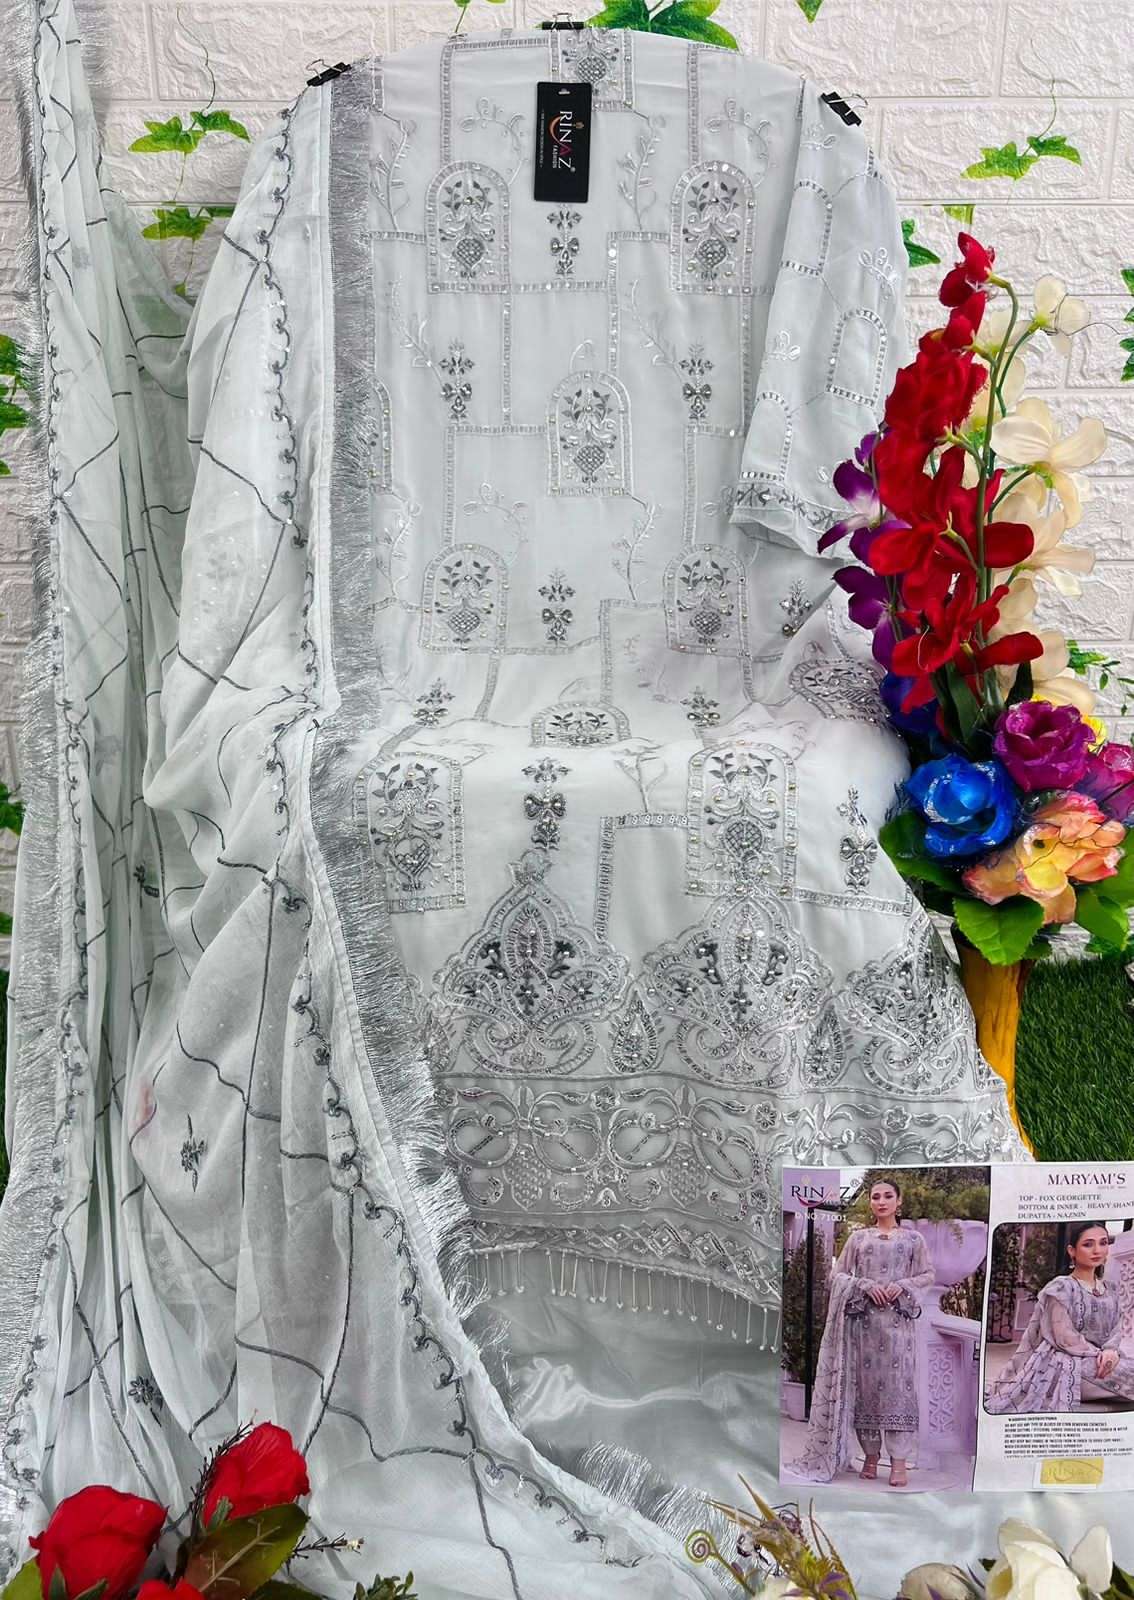 rinaz maryam gold vol-23 71001-71005 series designer wedding wear pakistani salwar kameez wholesaler surat gujarat